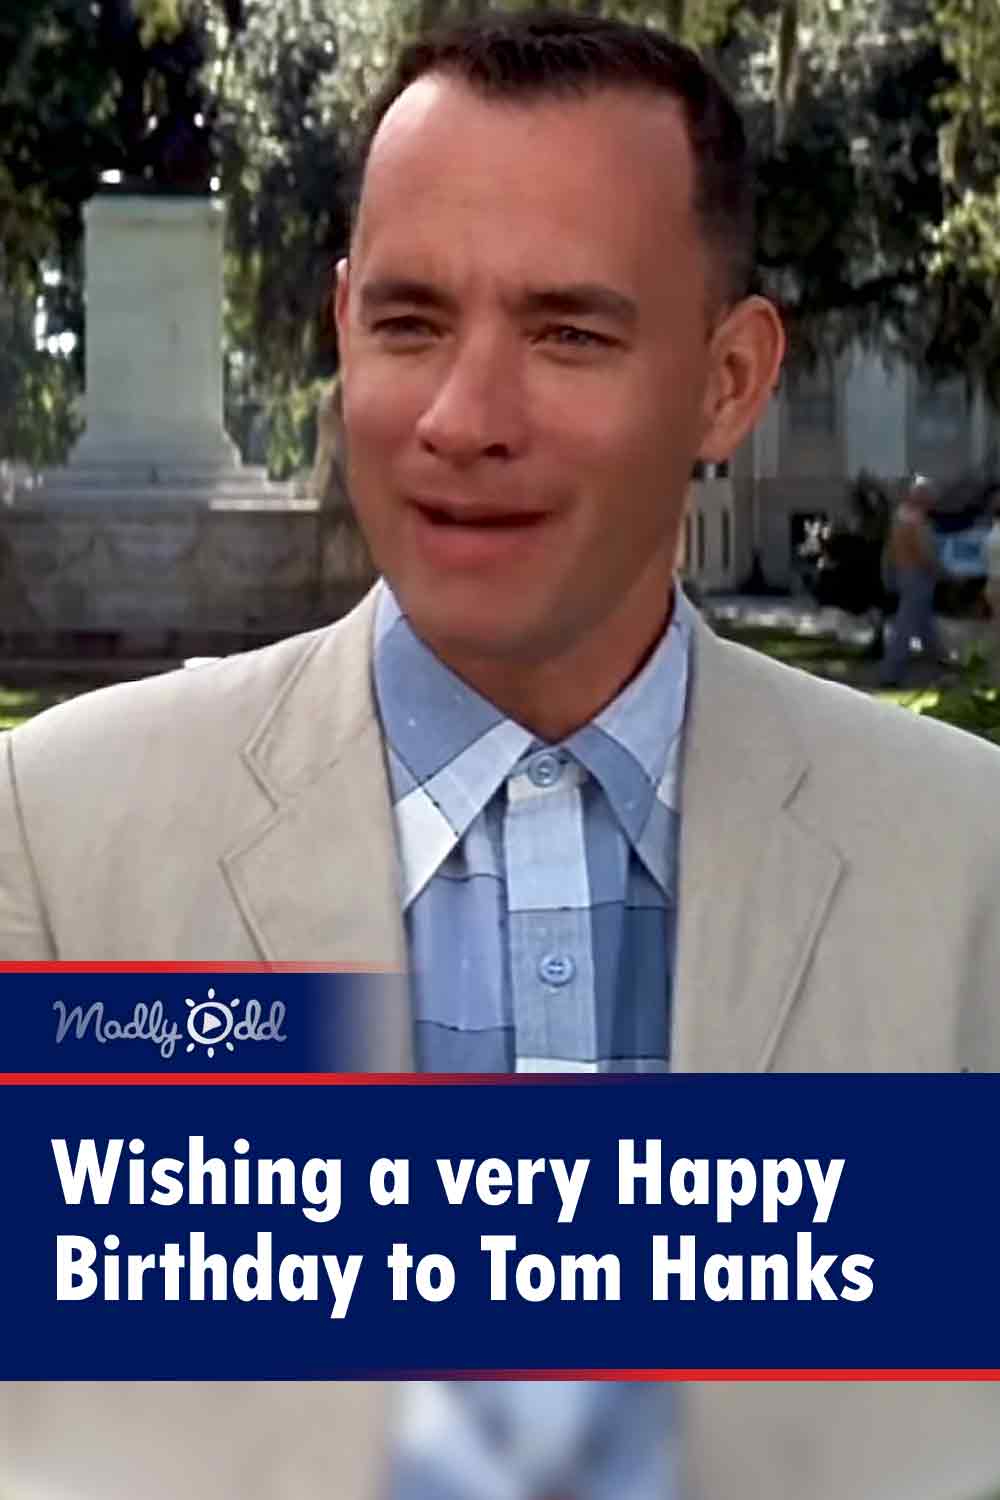 Wishing a very Happy Birthday to Tom Hanks